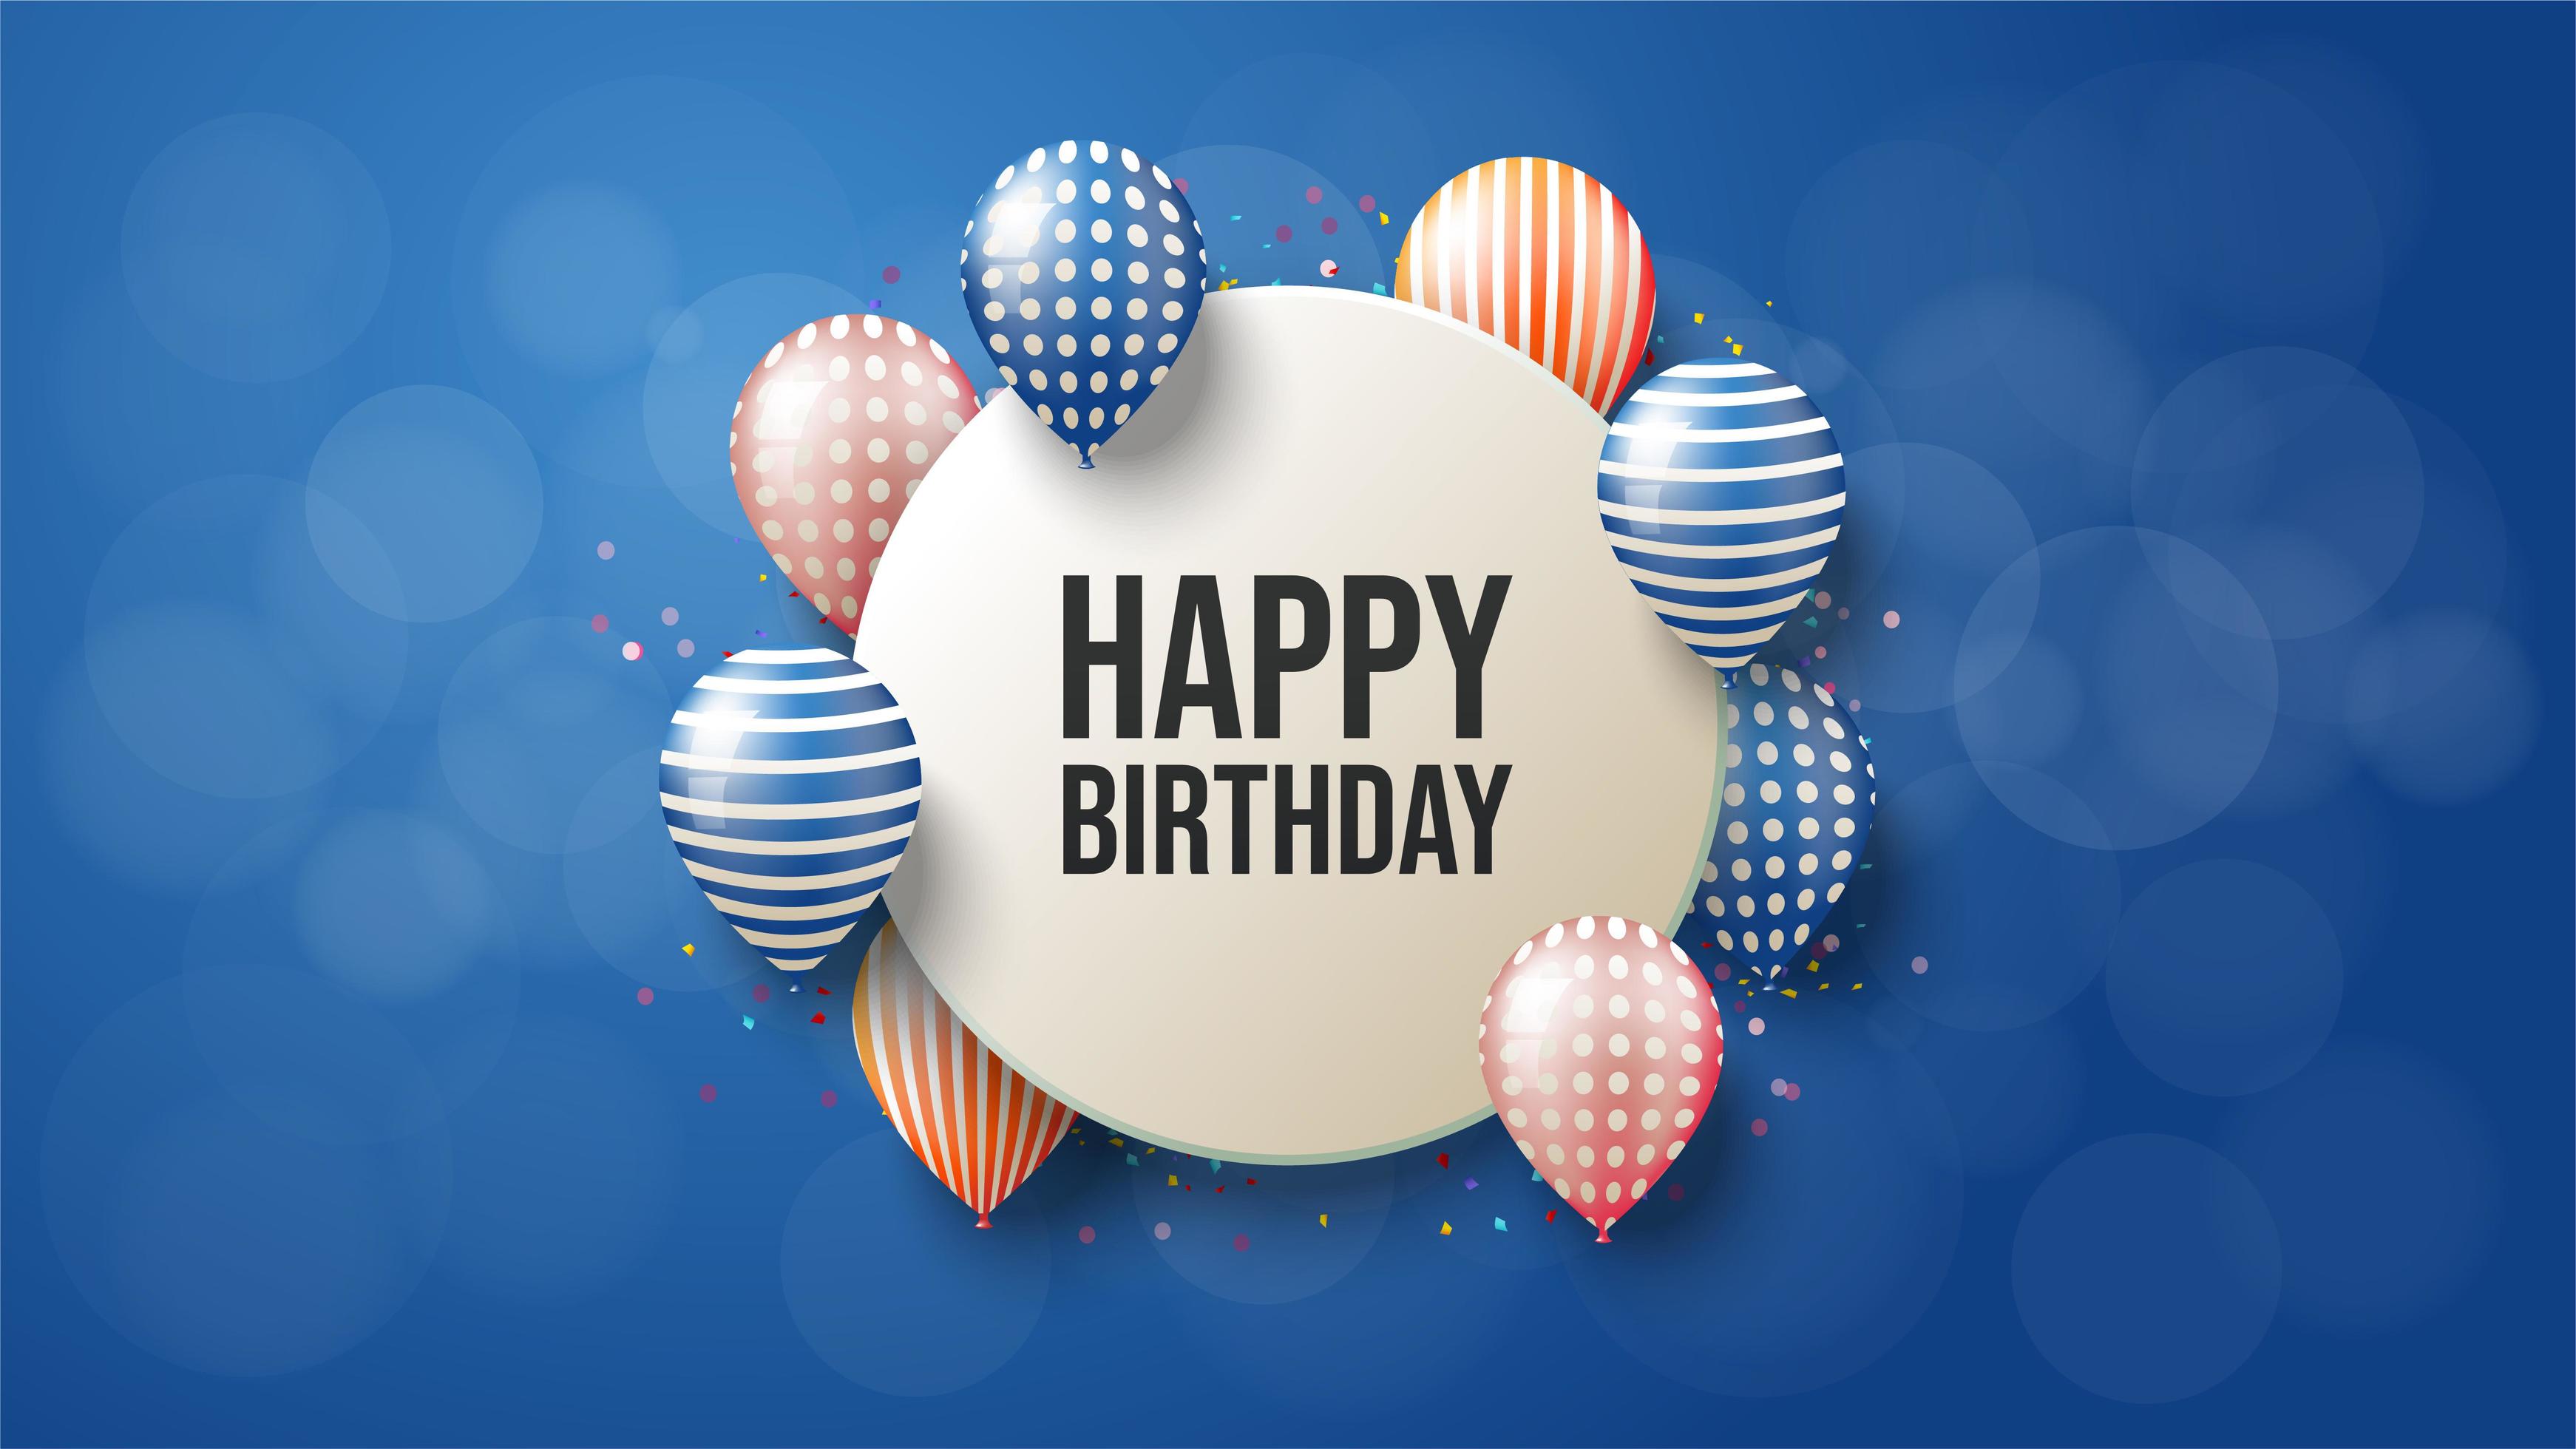 Circular Happy Birthday background - Download Free Vectors, Clipart